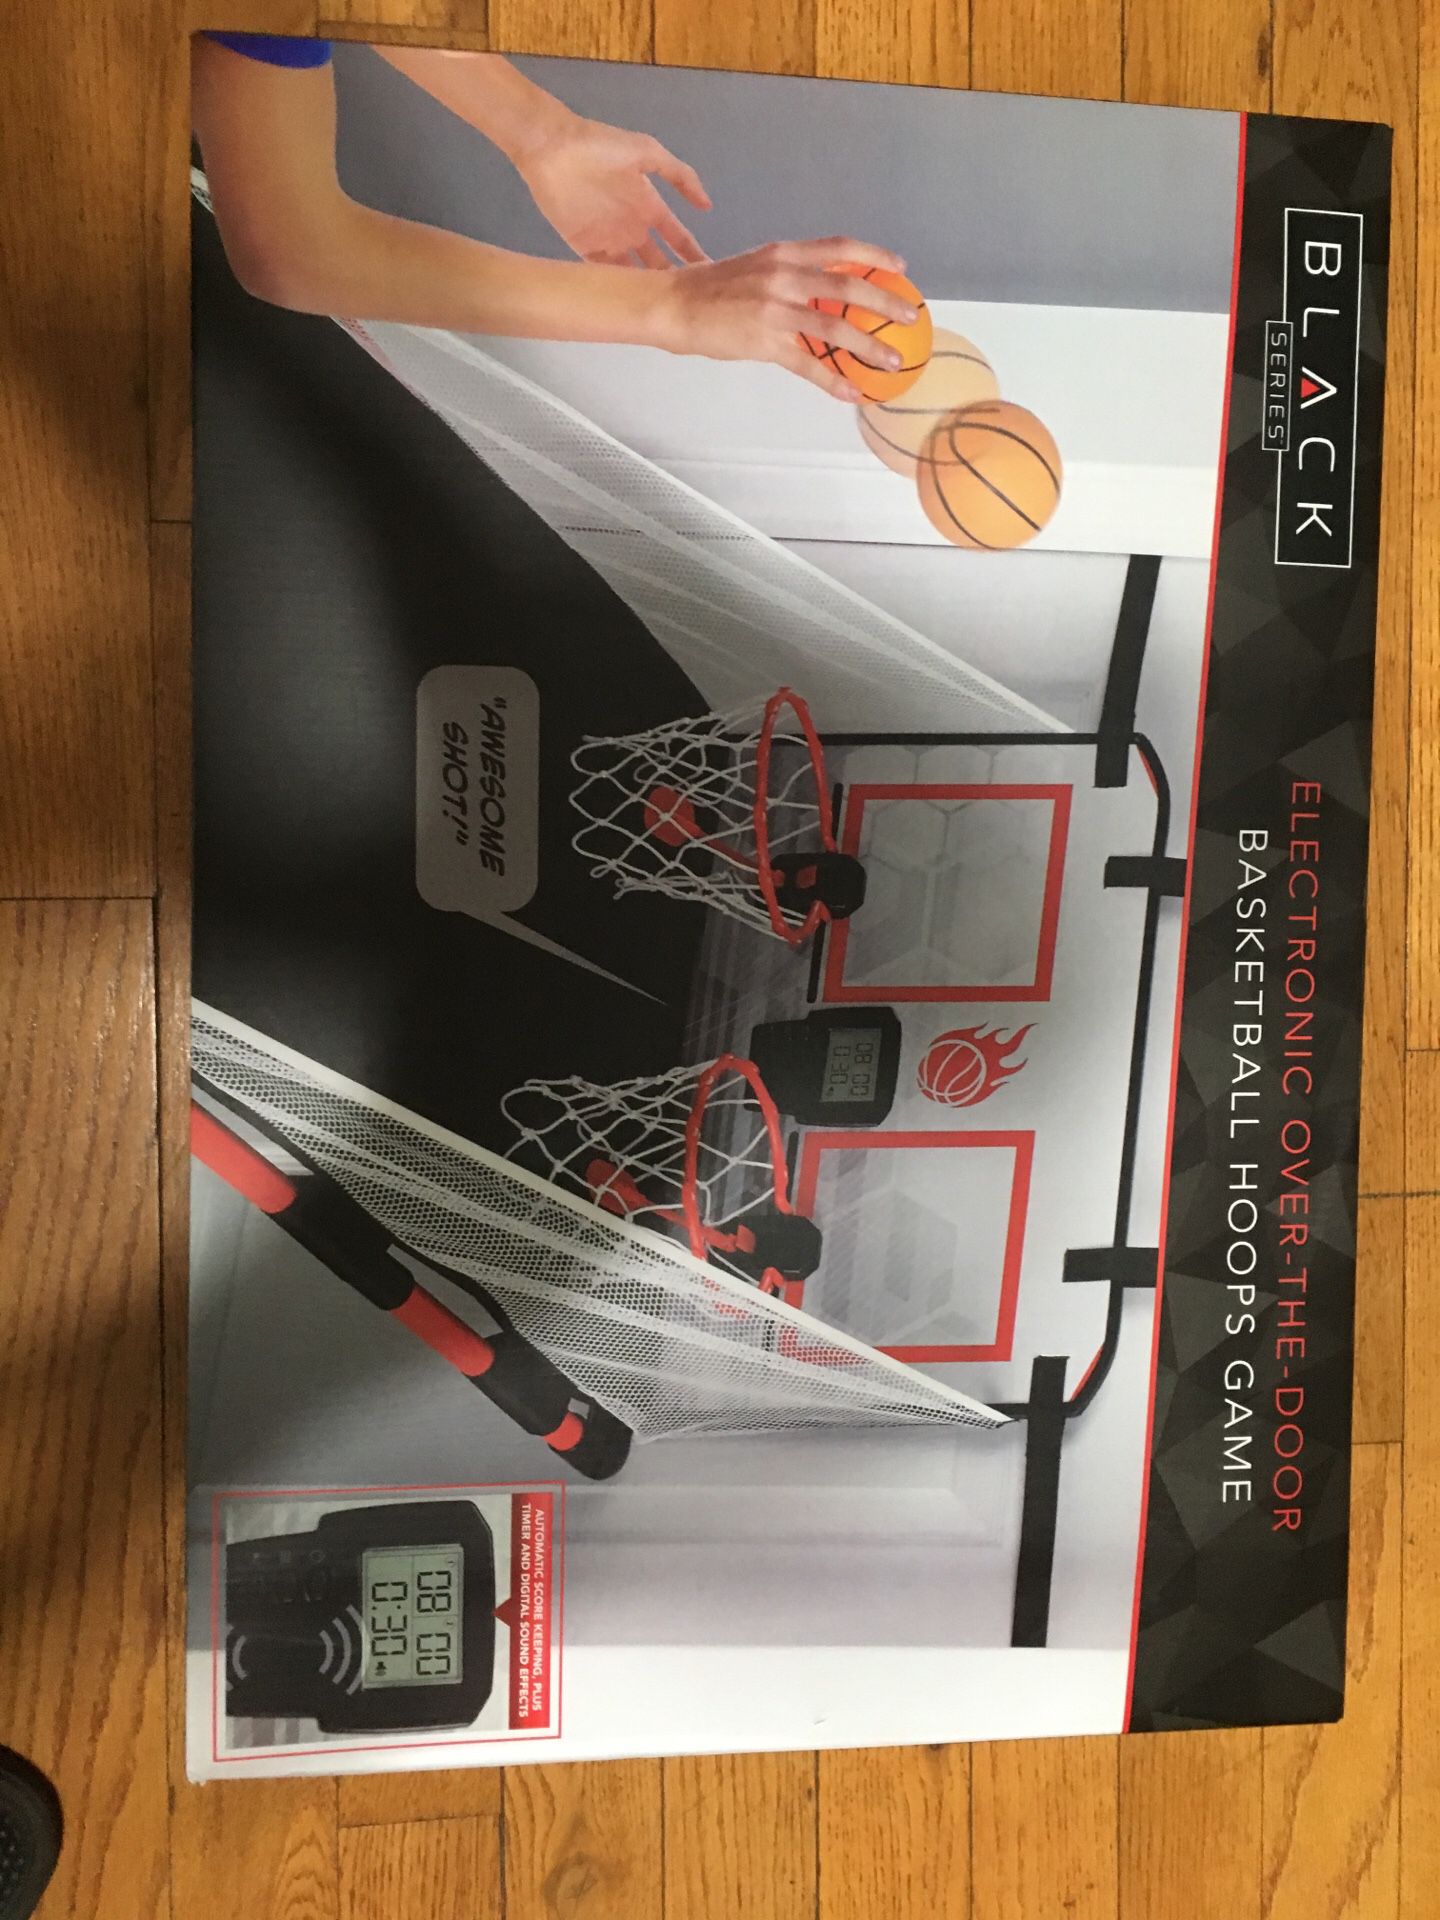 Electronic Over the door basketball hoop game